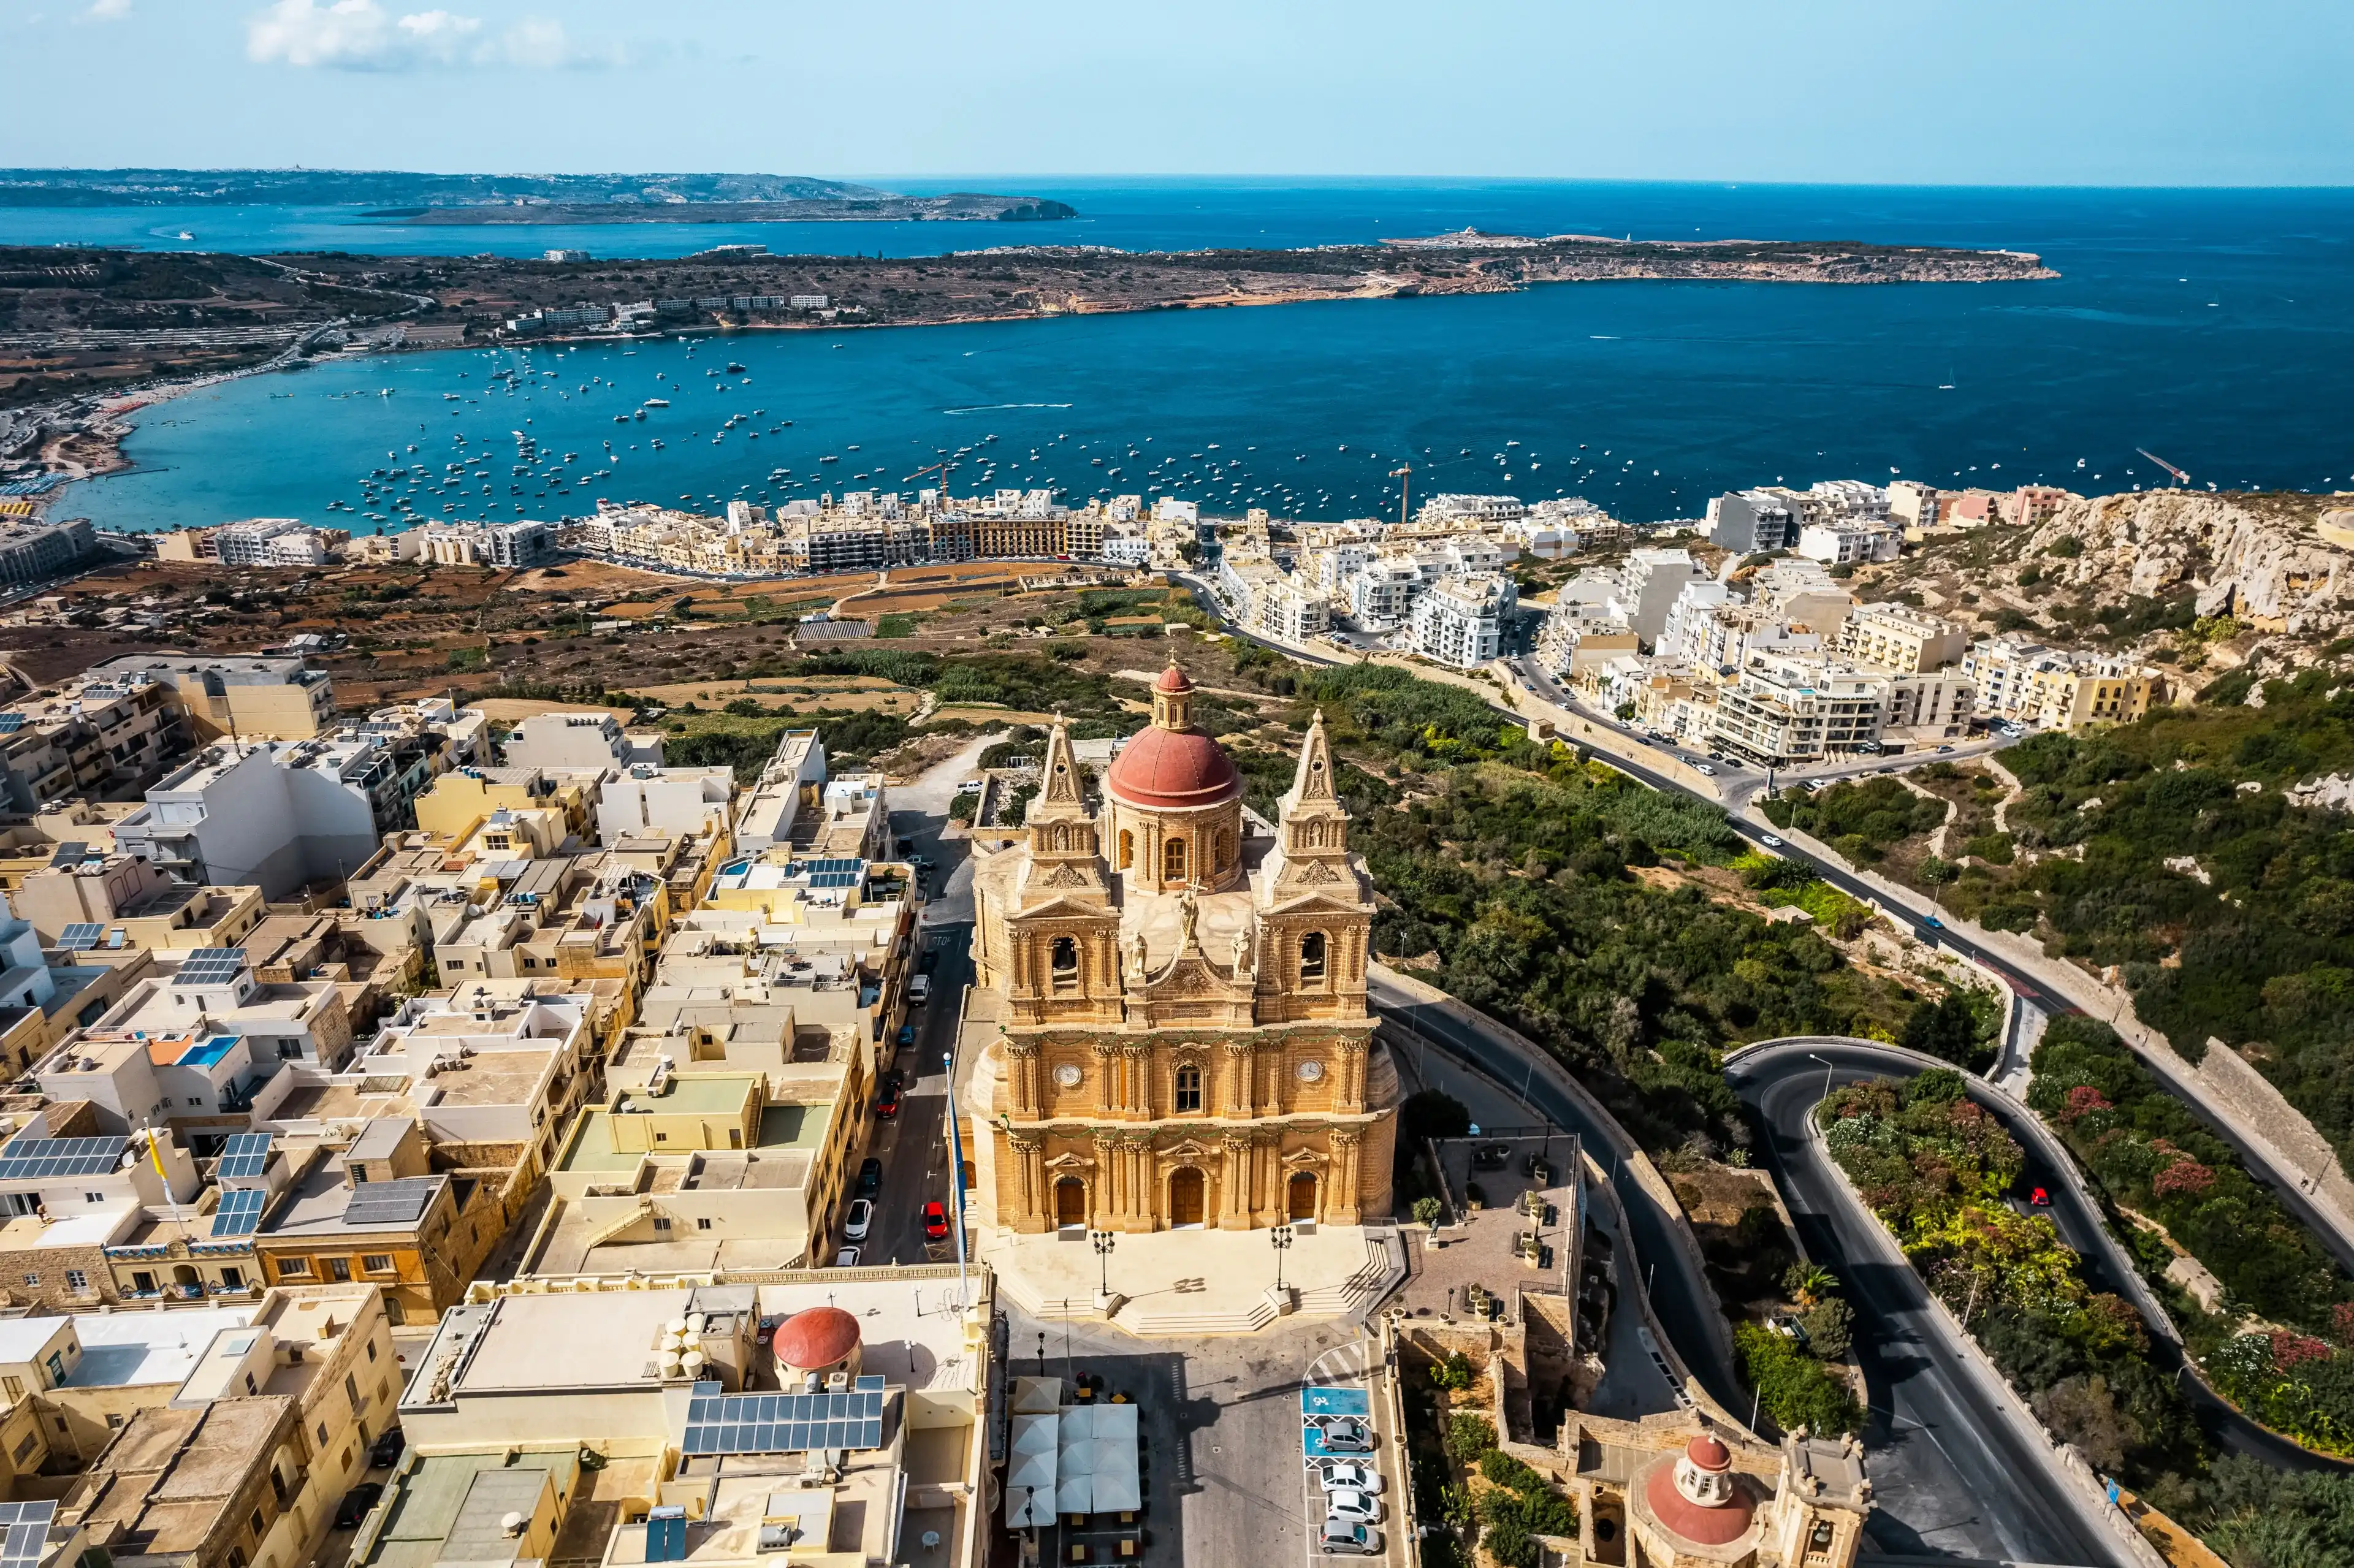 Sanctuary of Our Lady of Mellieħa, Malta